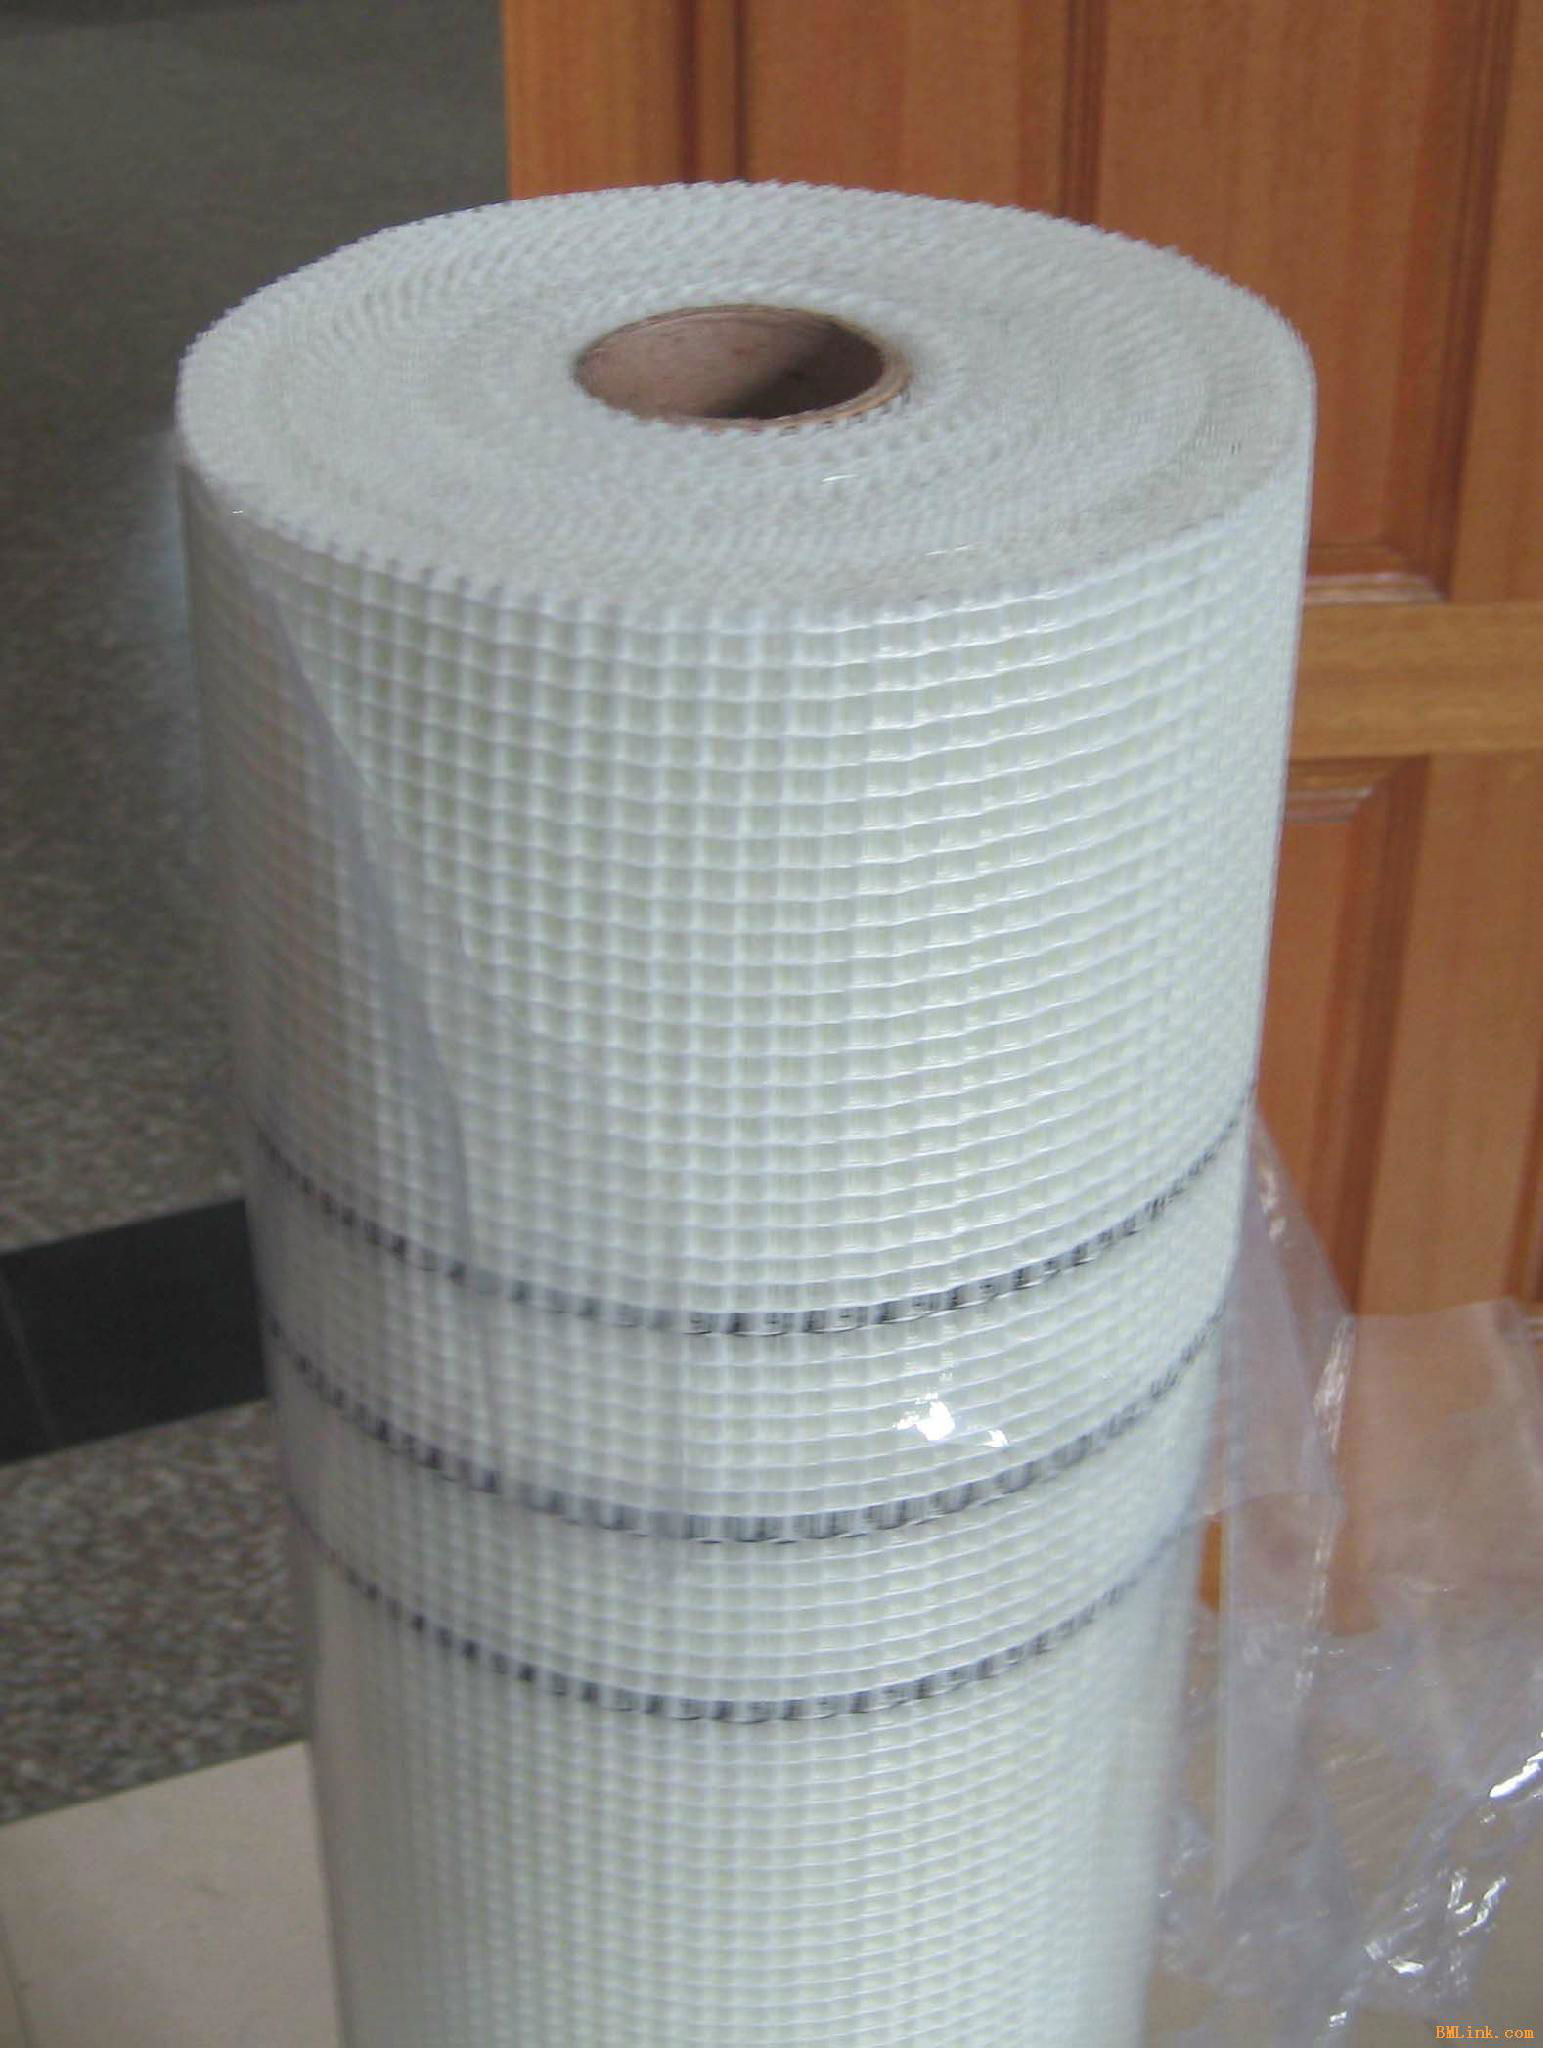 Drywall fiberglass cloth